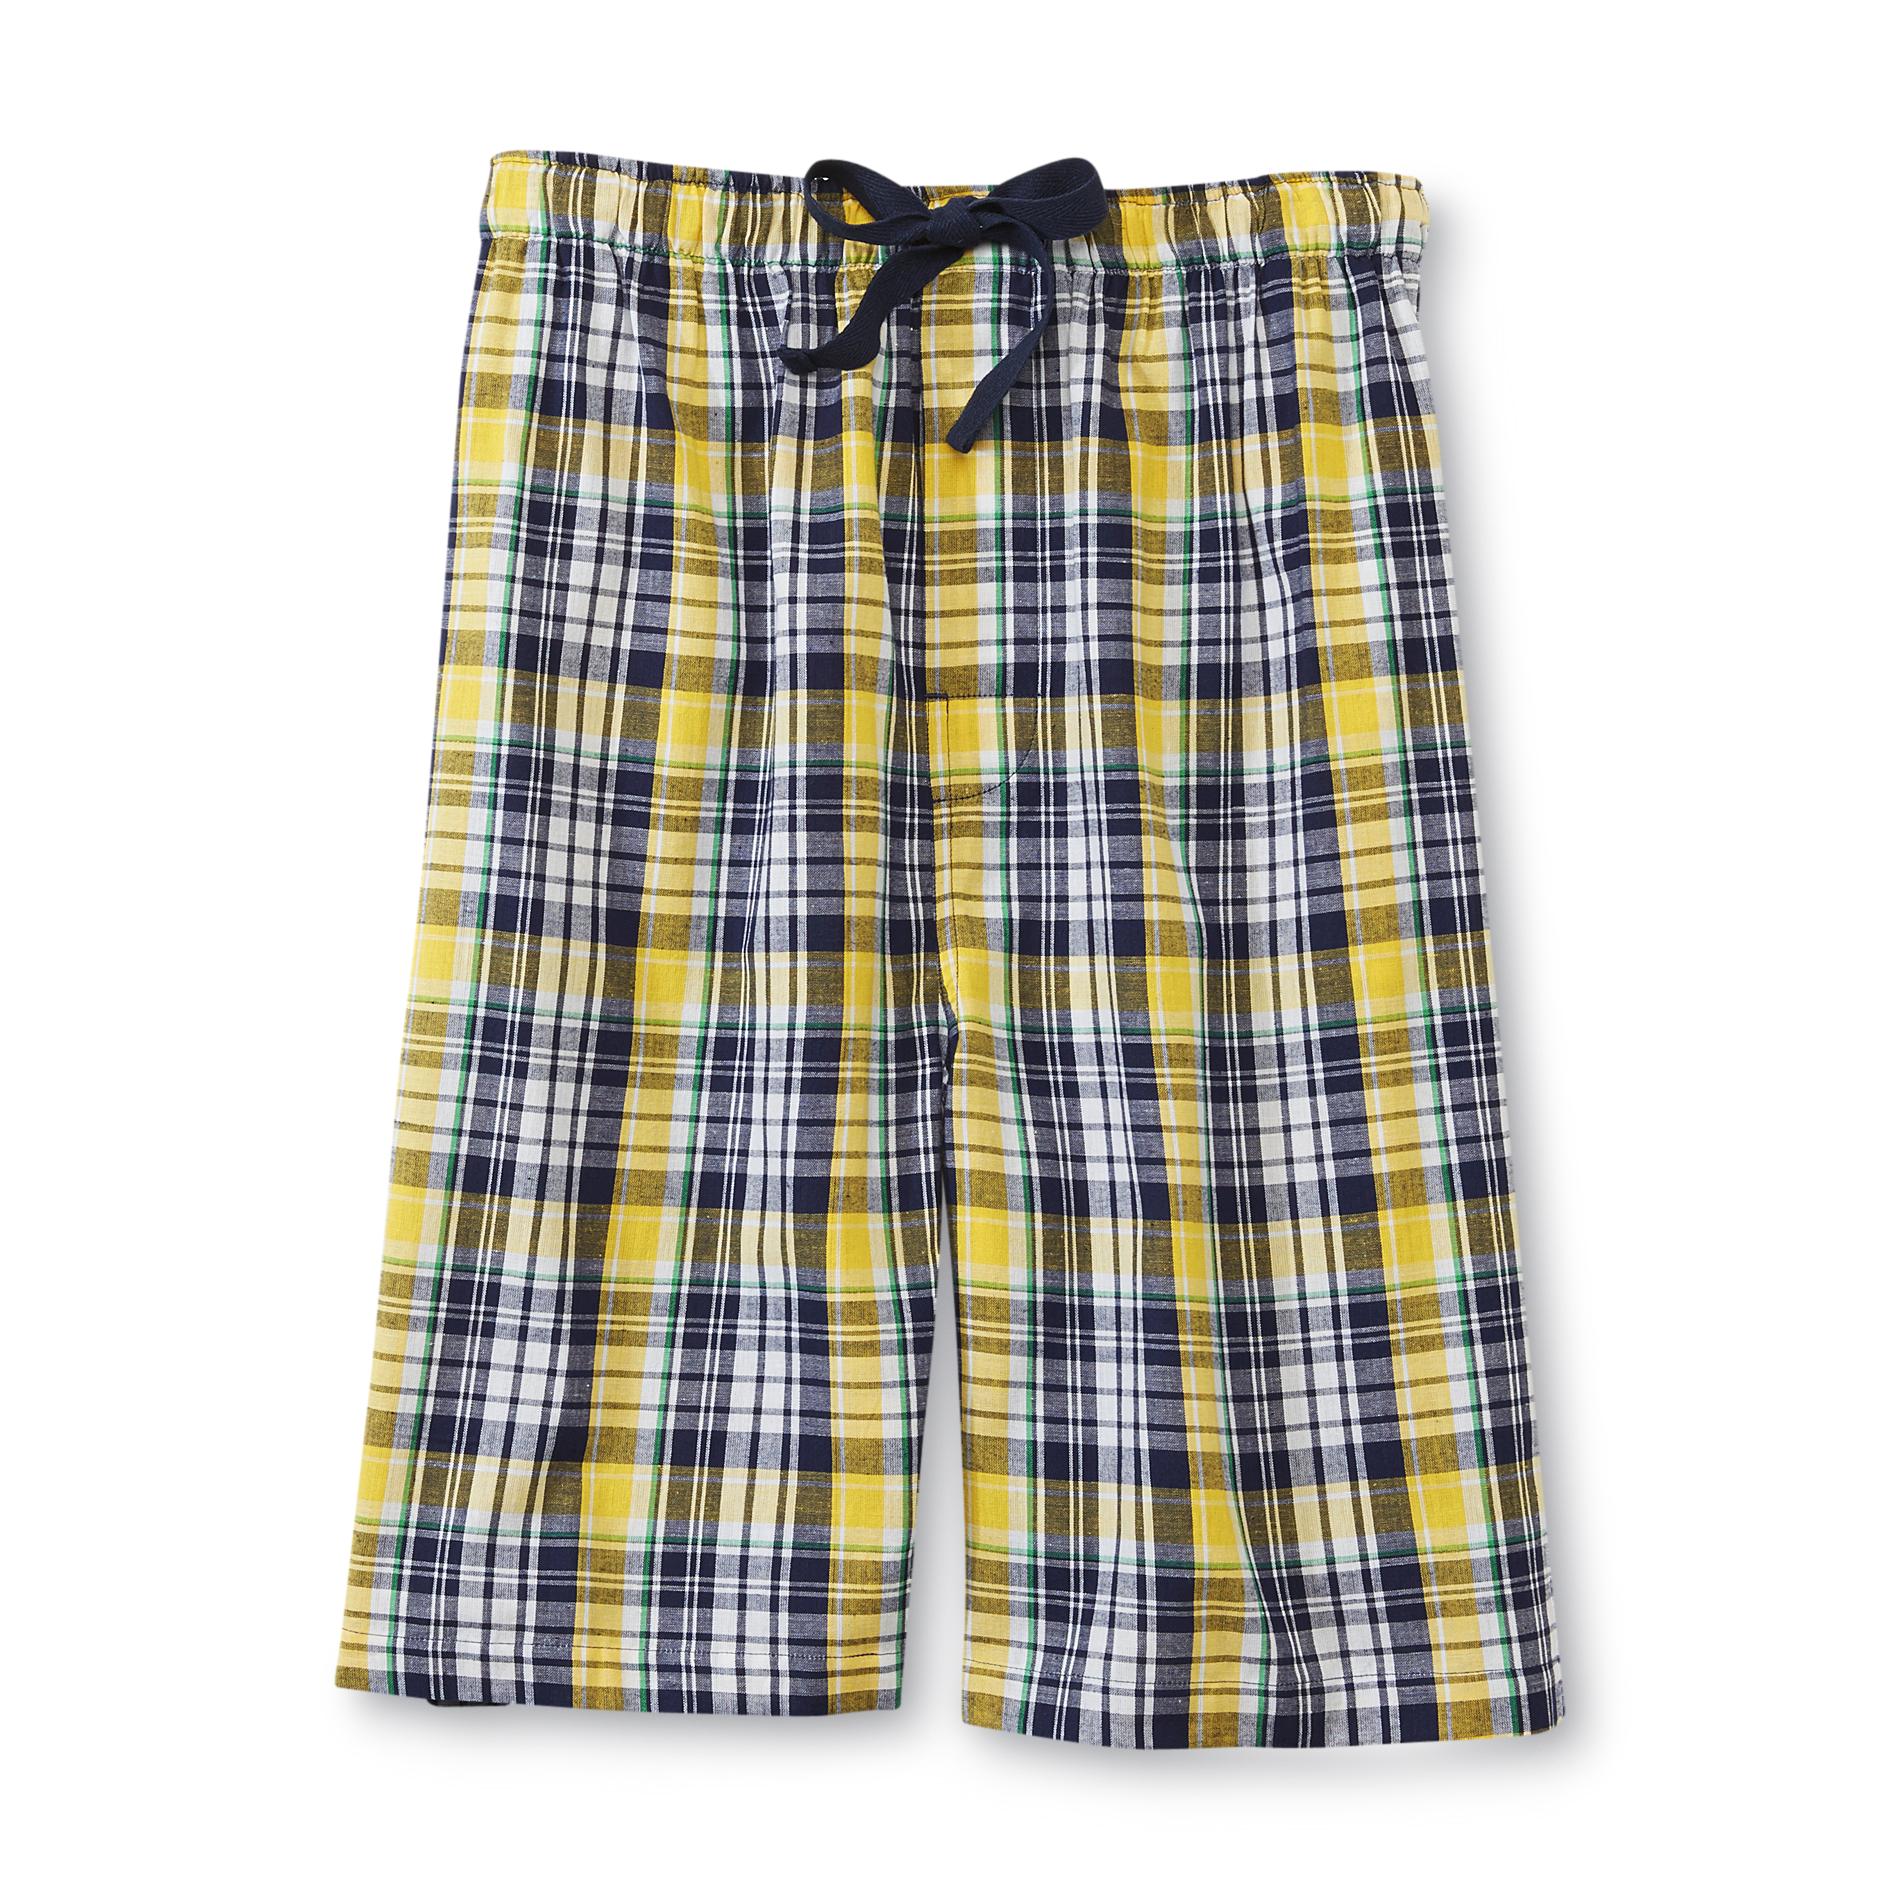 Covington Men's Plaid Woven Lounge Shorts